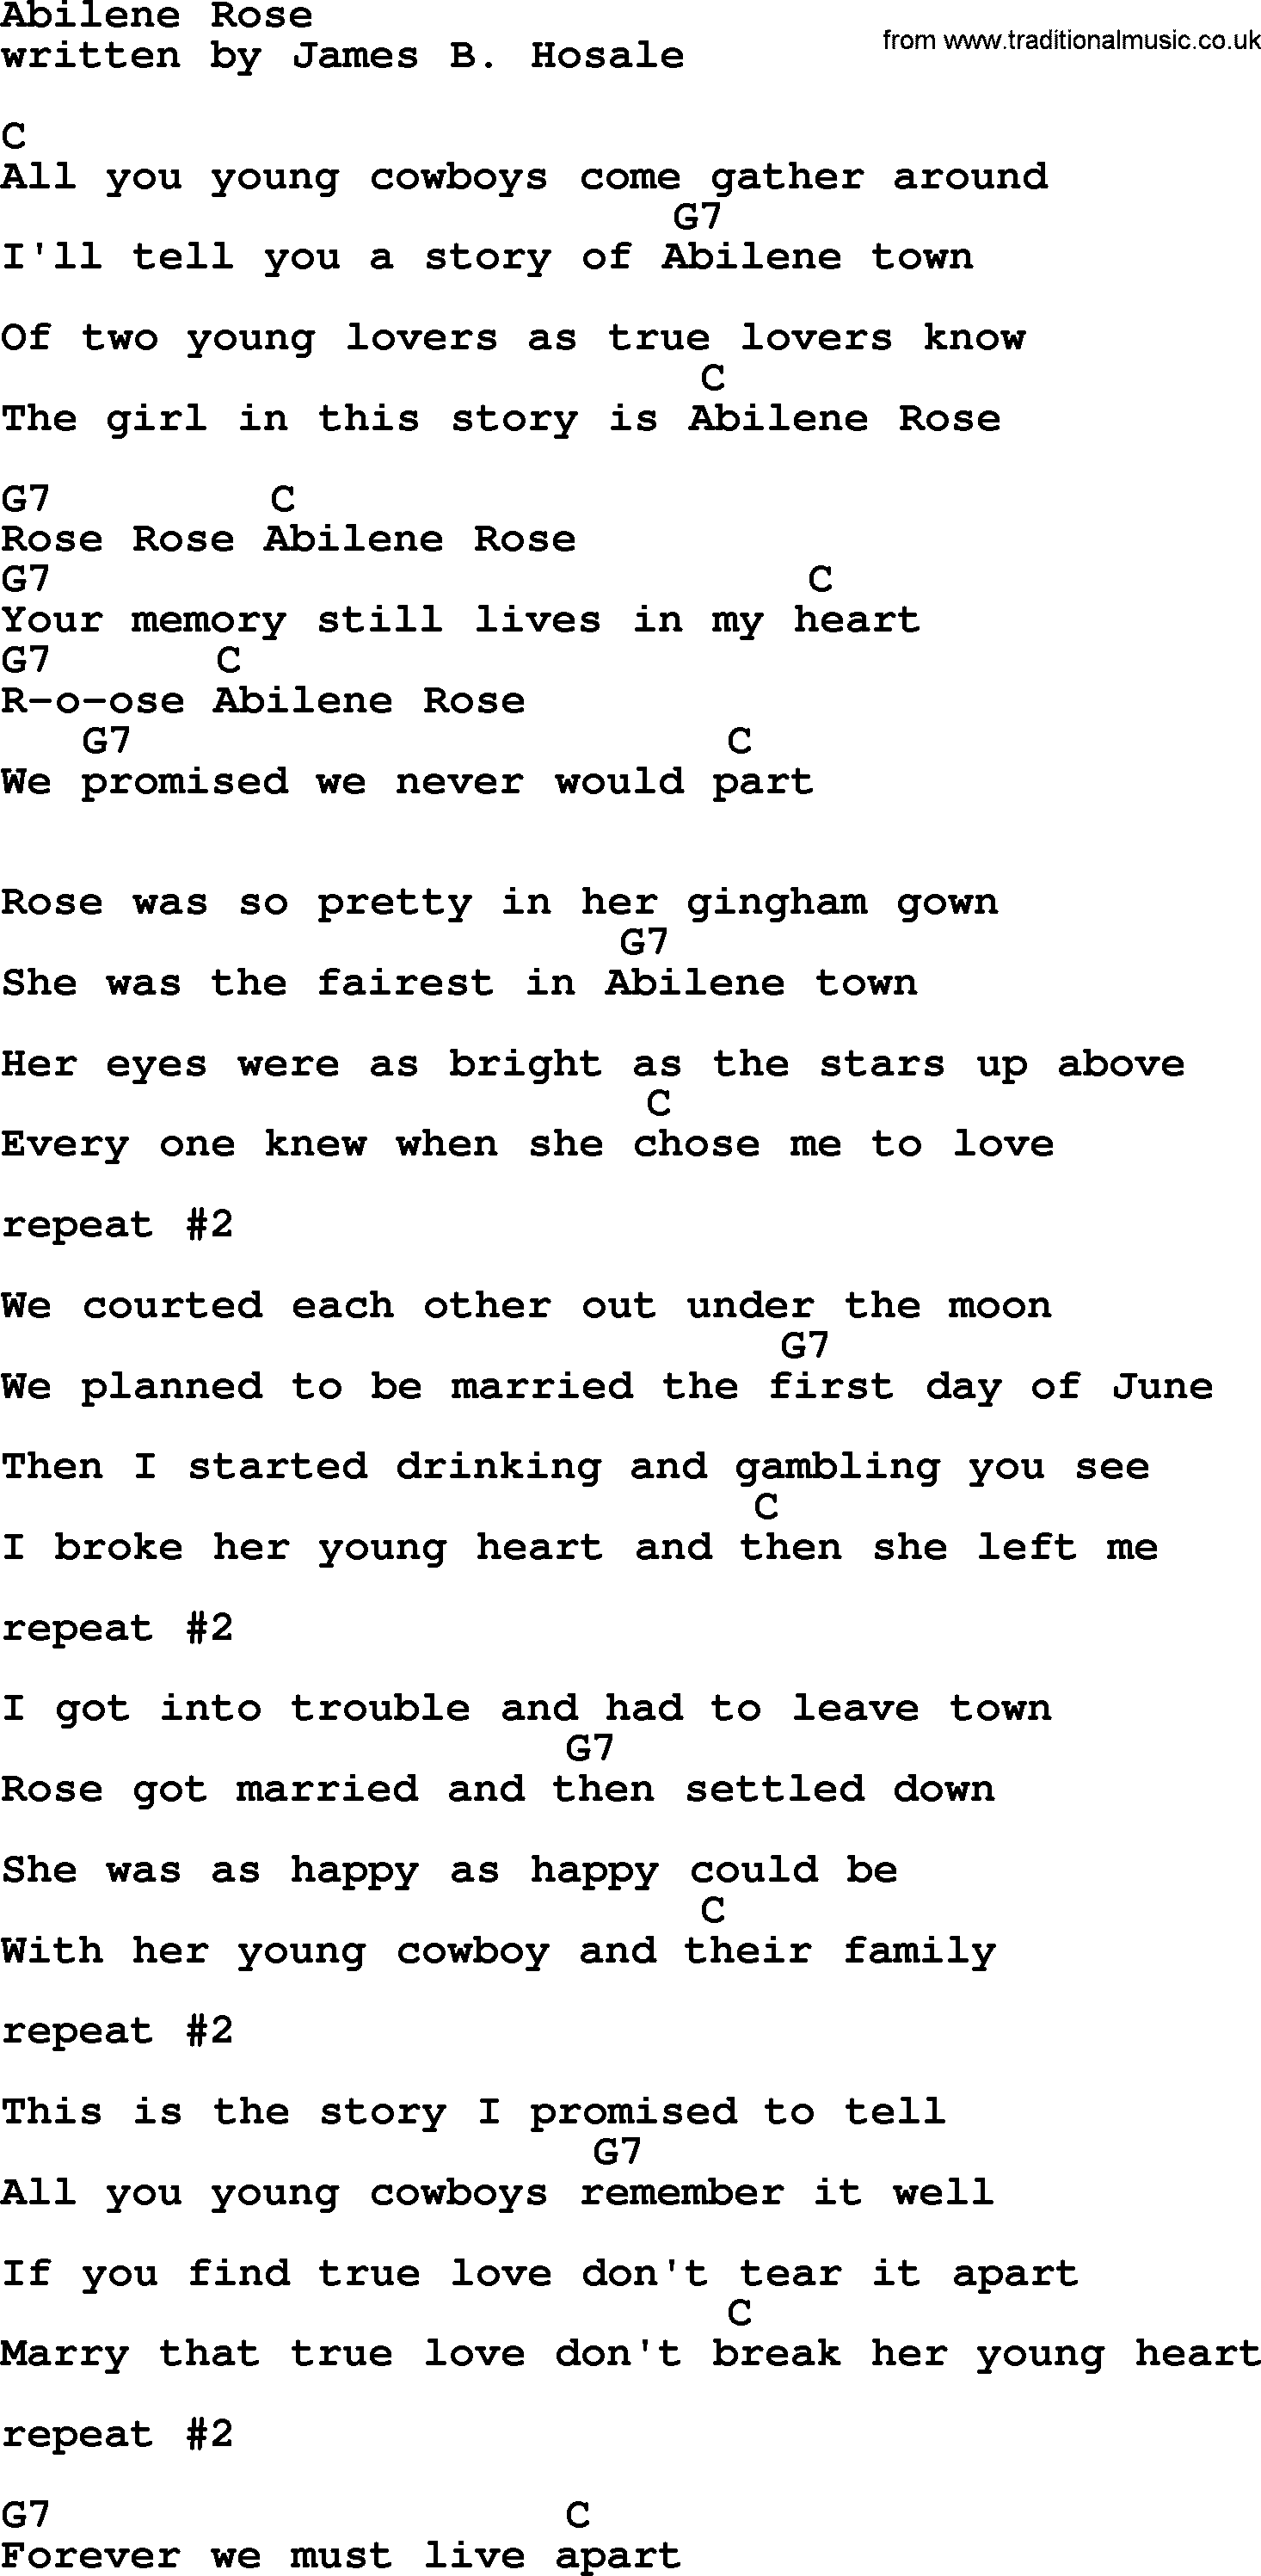 Marty Robbins song: Abilene Rose, lyrics and chords